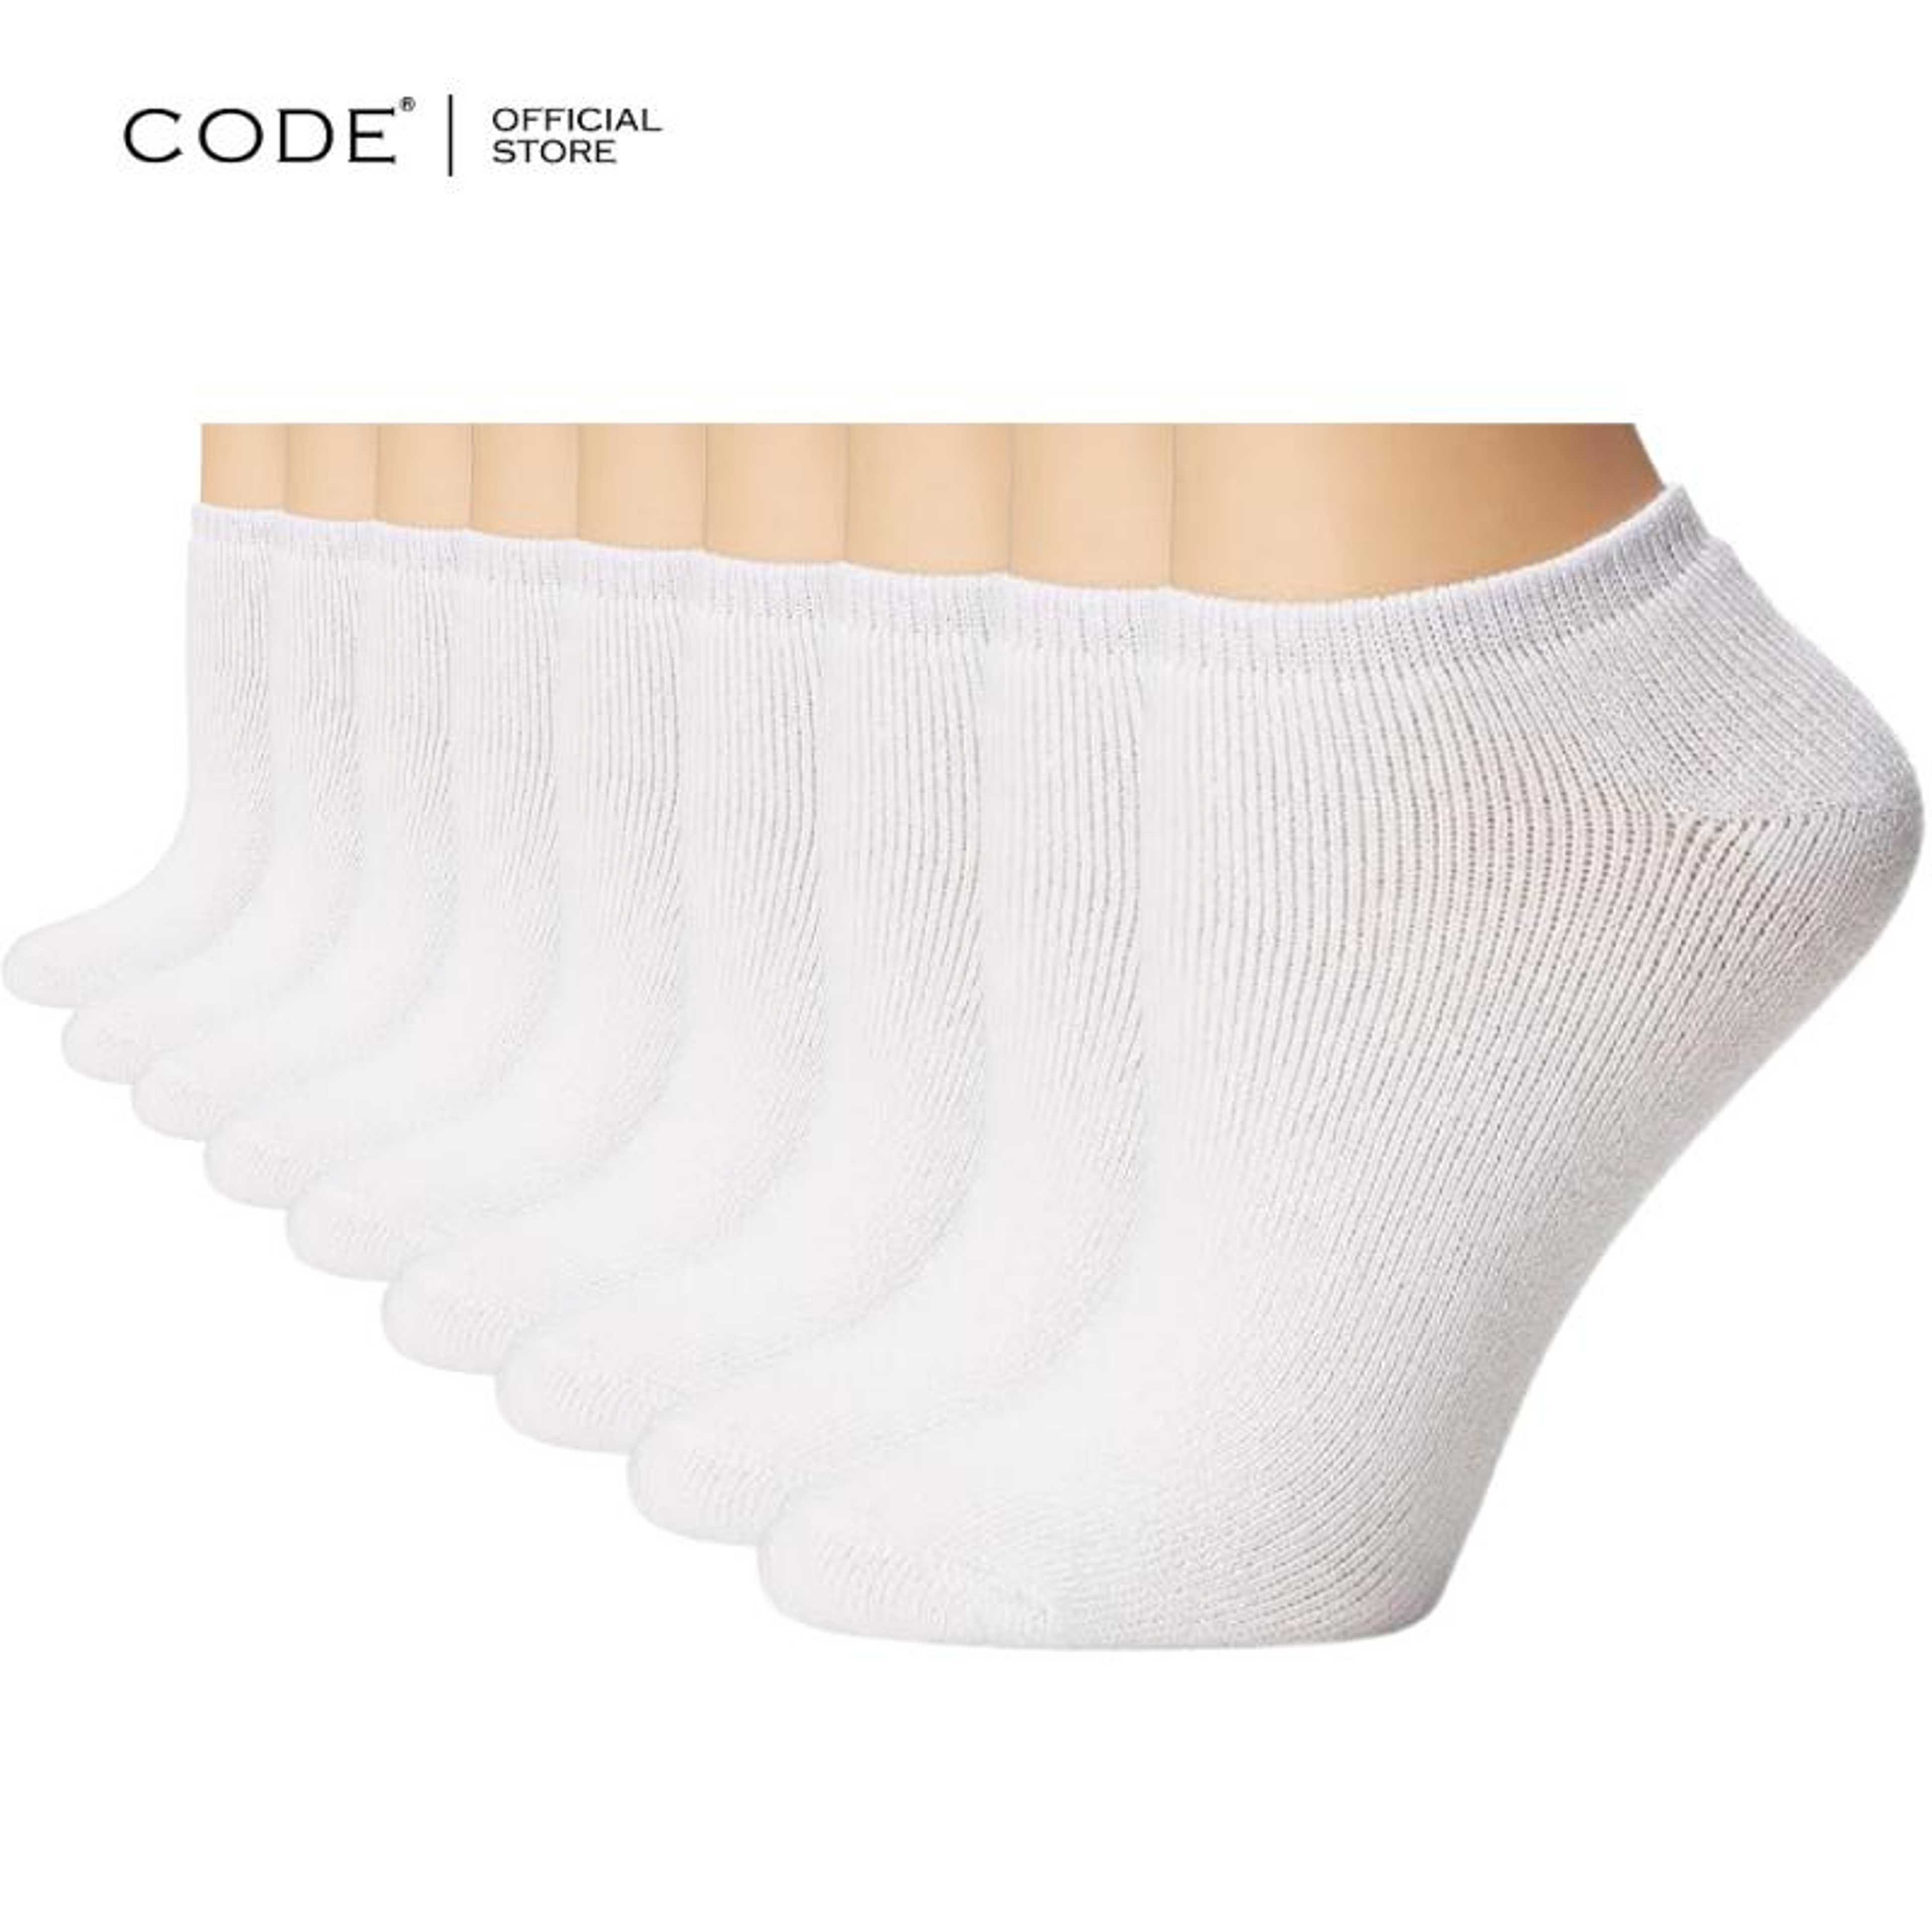 Code 9 Pairs Cotton Ankle Socks For Men Women  Cotton Ankle Socks For Men  No Show Low Cut Socks For Men  Business Casual Socks For Men- 3 Random colors